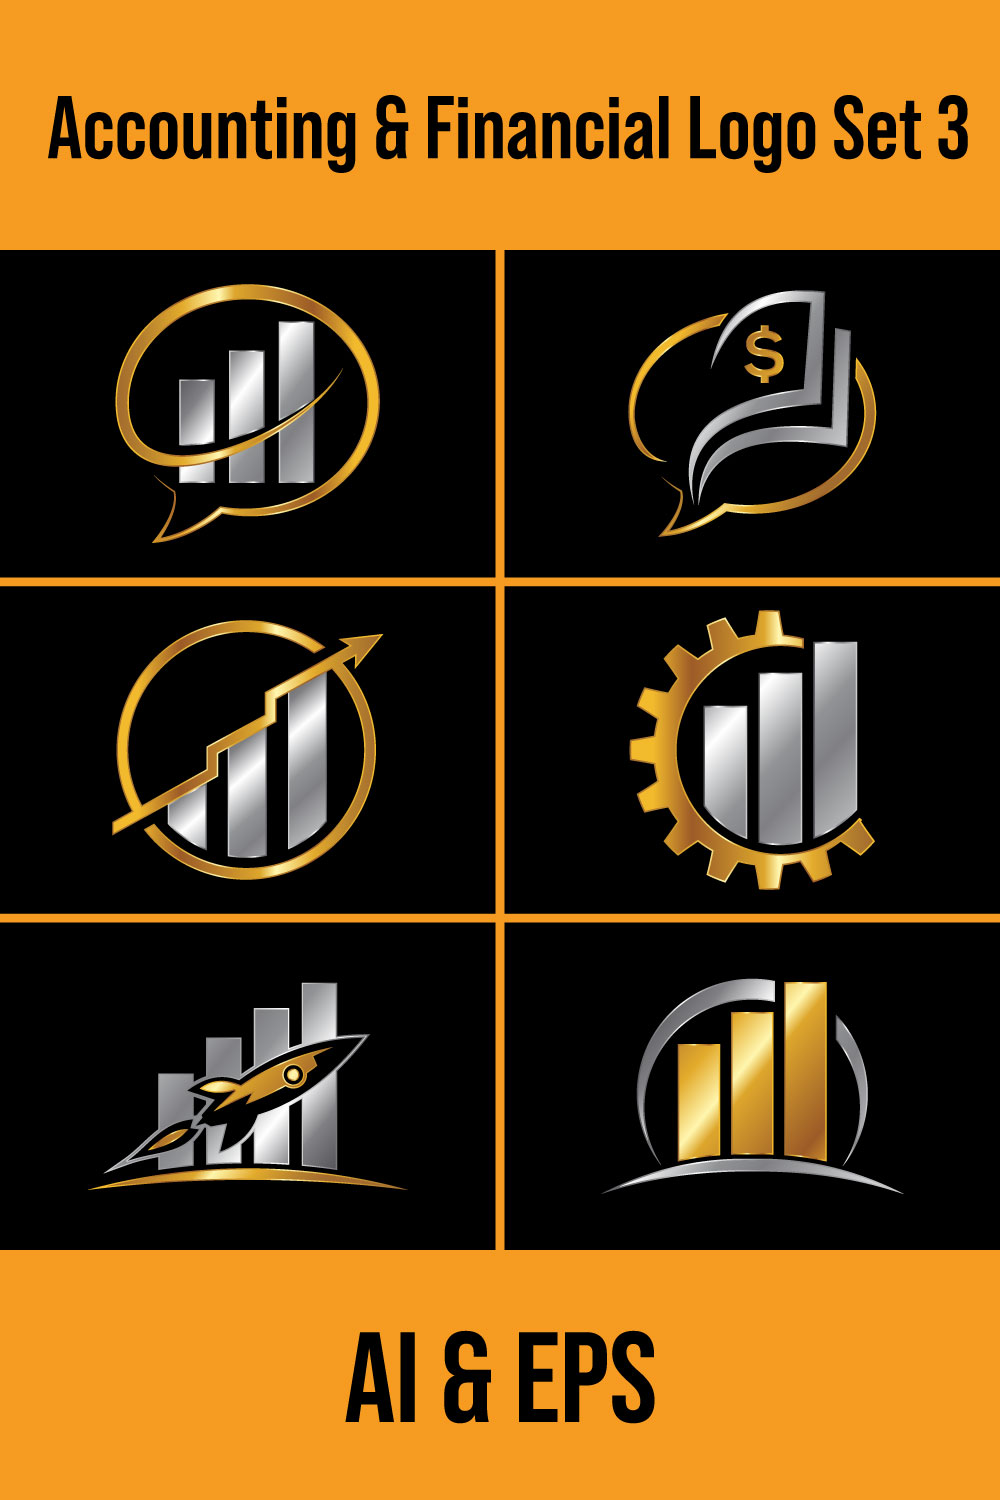 Finance and Accounting Logo Set Pinterest image.